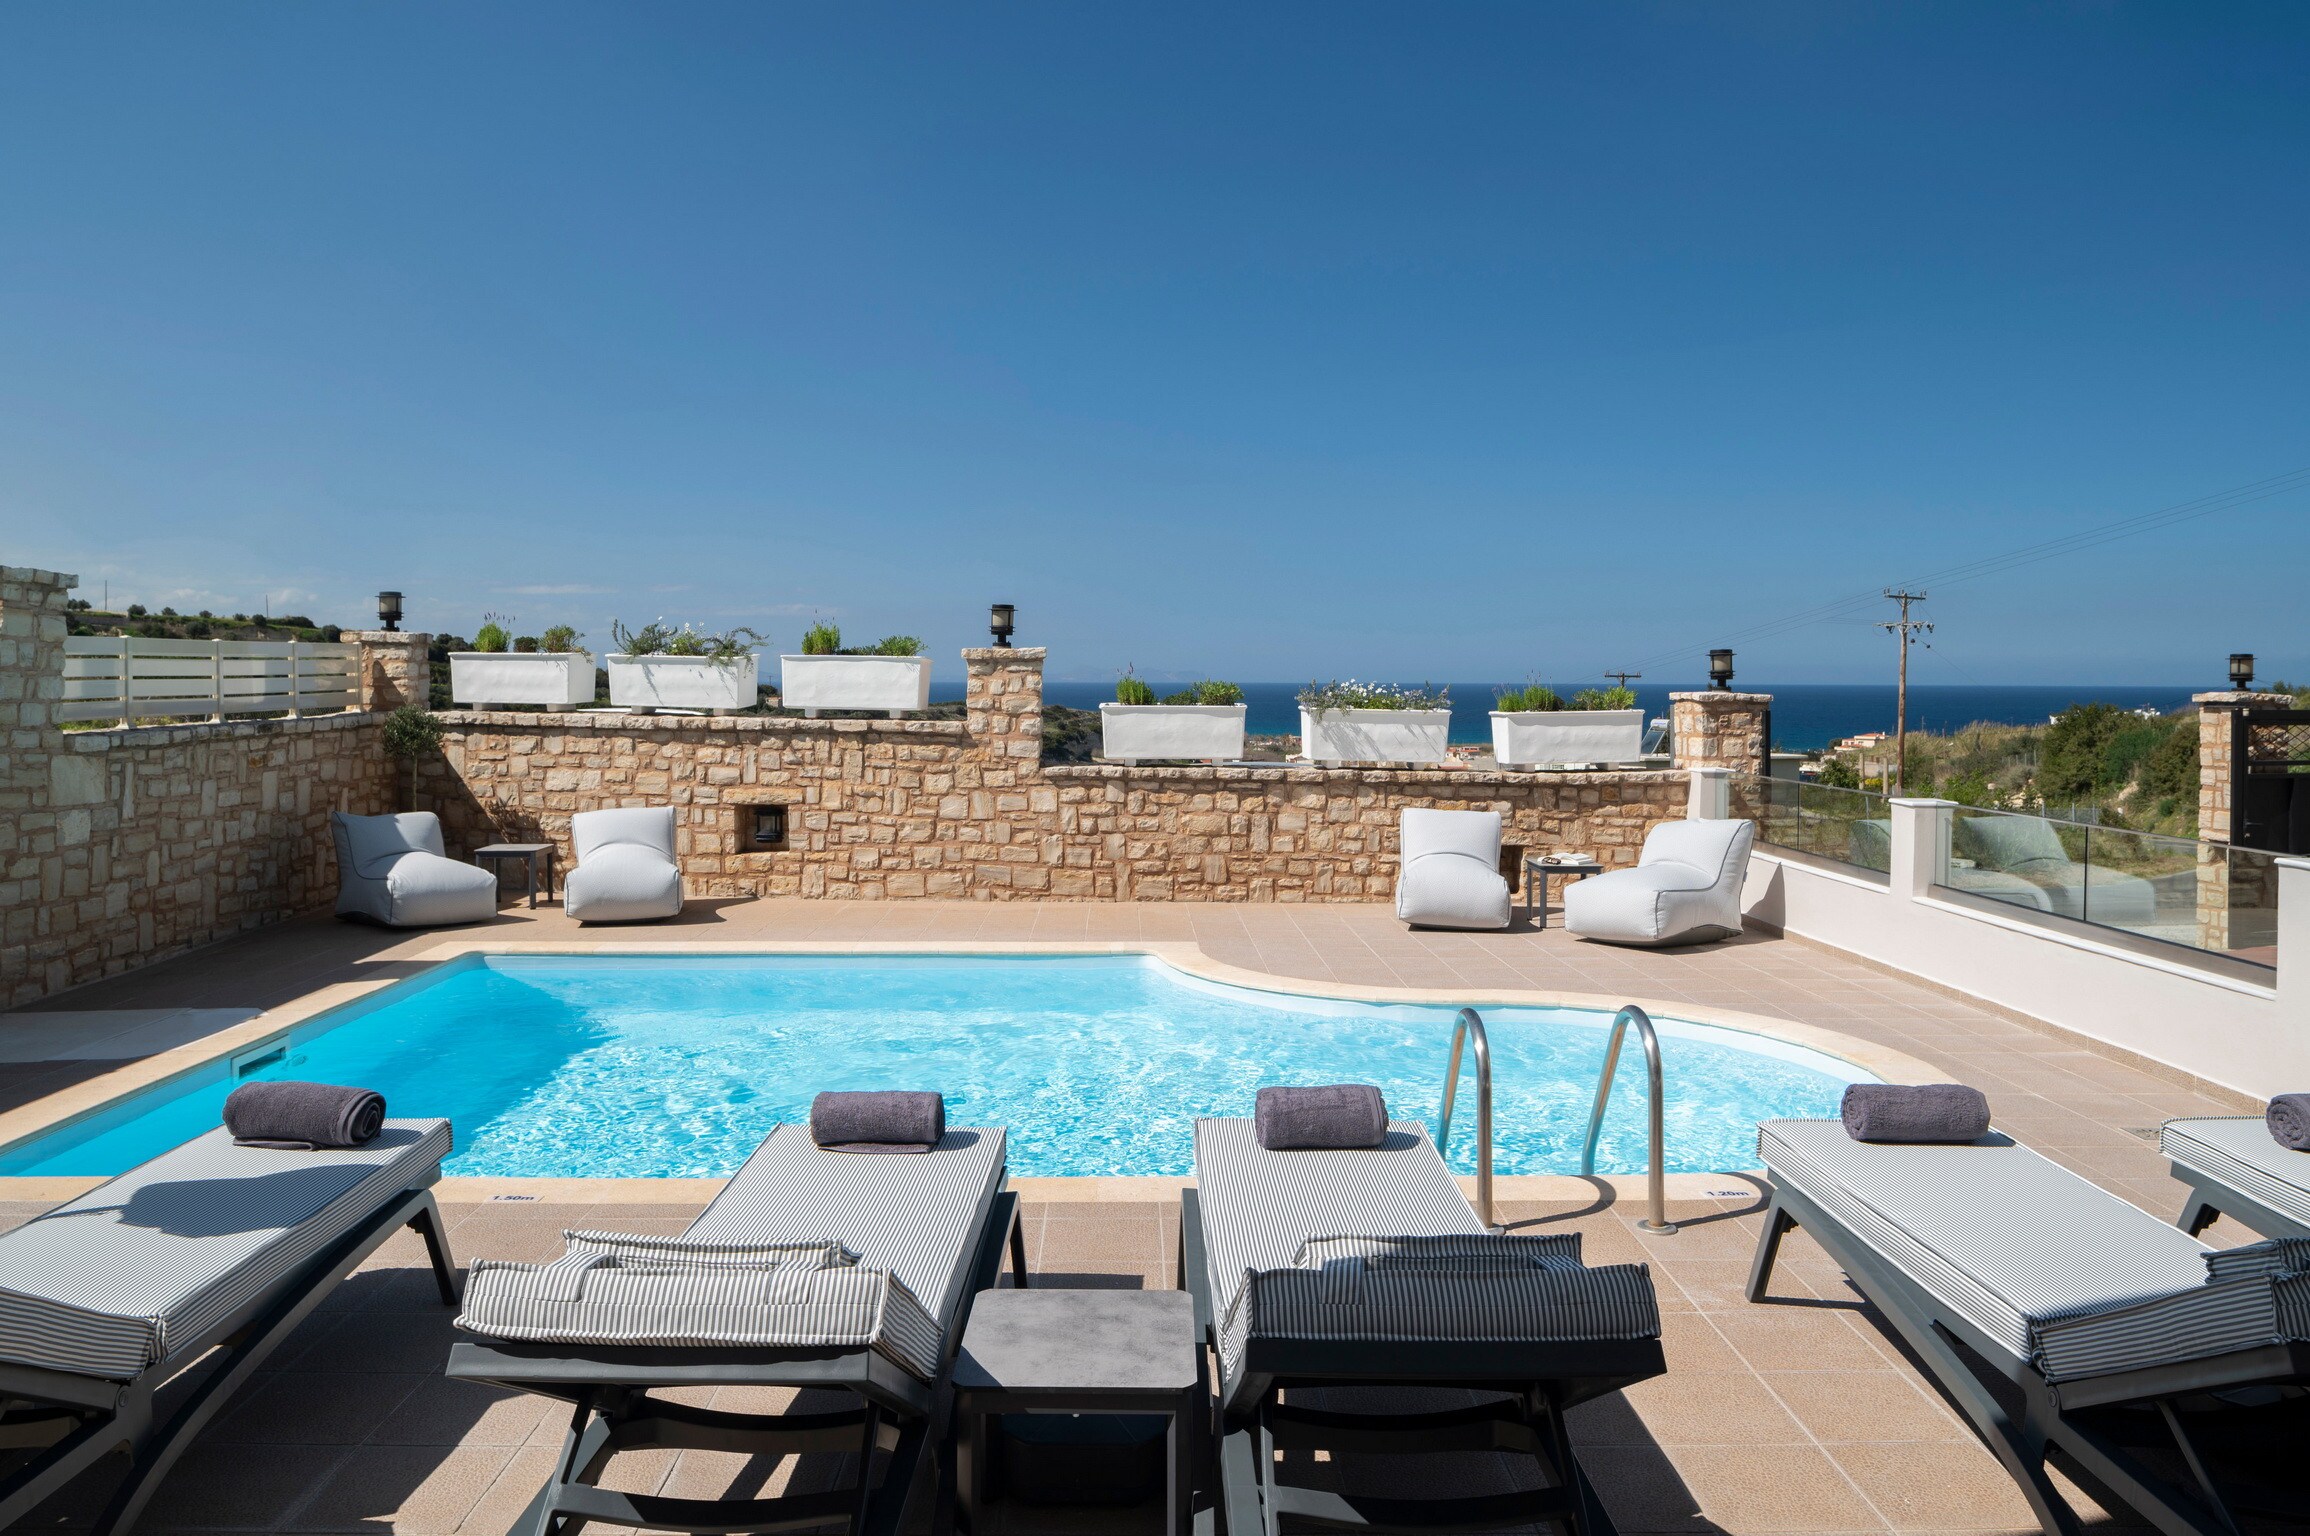 Swimming pool area of Fully equipped apartment,Shared pool,Near beach,tavern,supermarket,Nea Magnissia,Rethymno,Crete